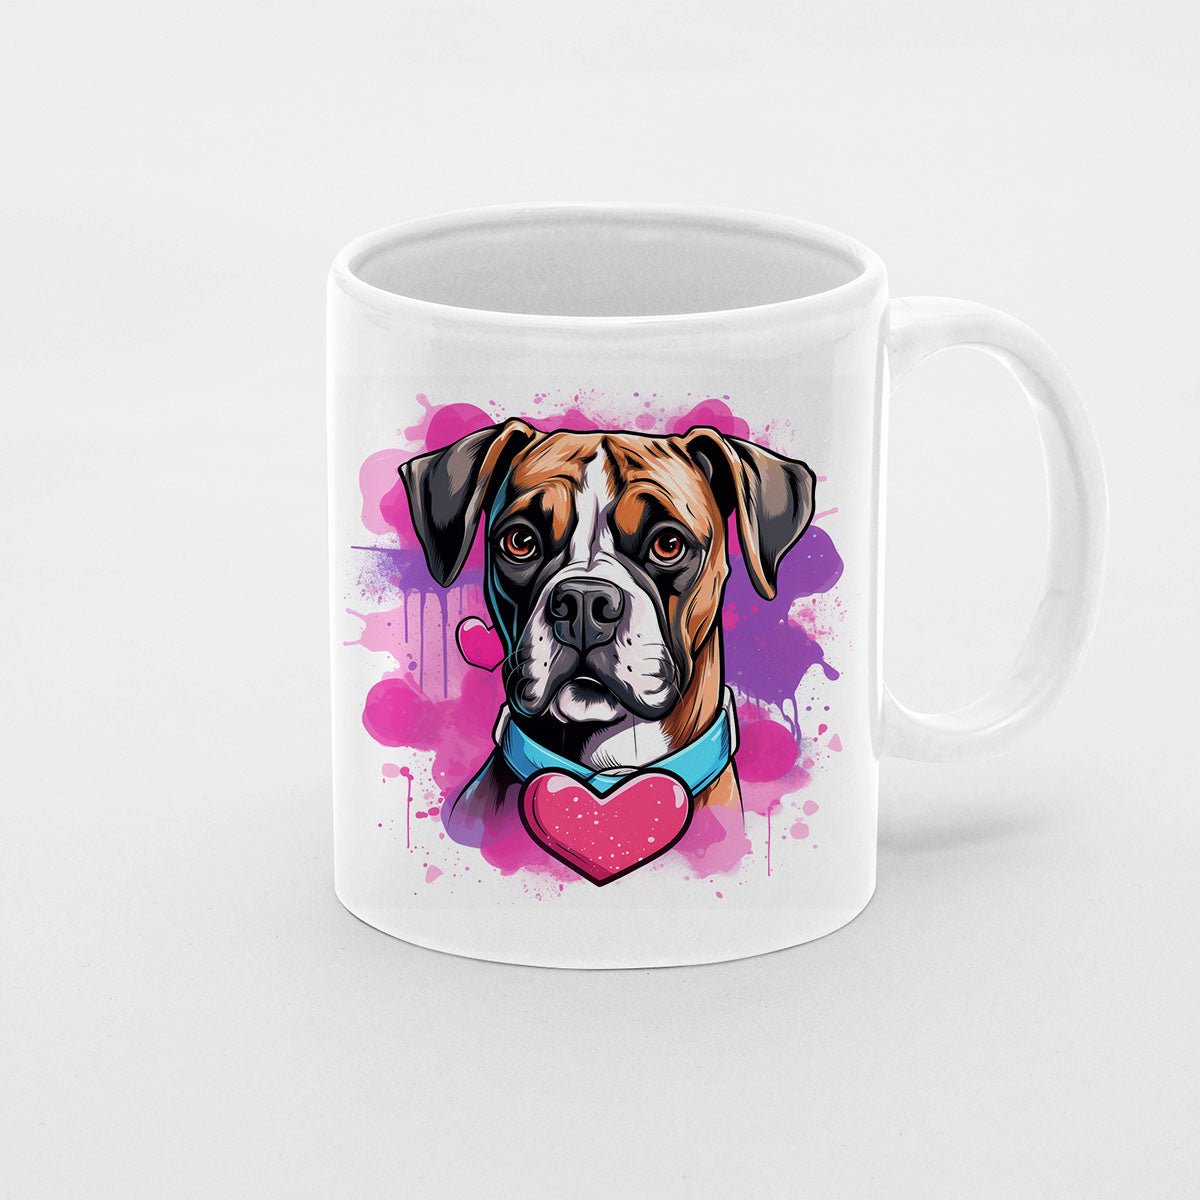 Custom Valentine's Day Dog Mug, Personalized Valentine's Day Gift for Dog Lover, Cute Boxer Love Ceramic Mug, Dog Coffee Mugs, Personalized Pet Mugs, Cute Valentine Puppy Heart Ceramic Mug, Valentines Gift